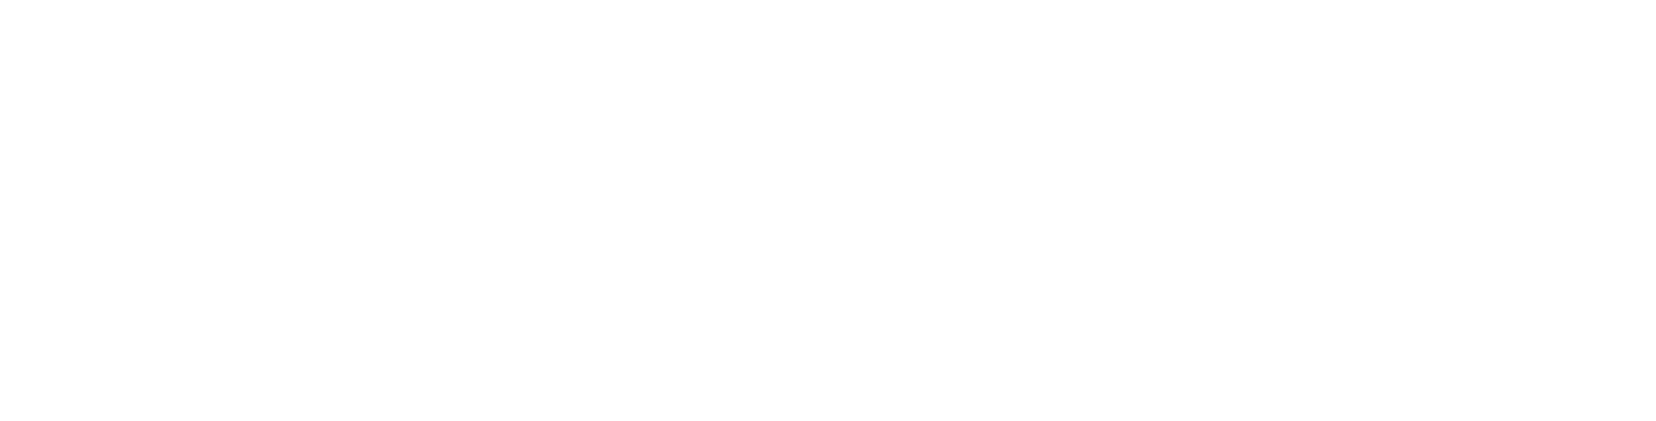 Chongqing Changan logo grand pour les fonds sombres (PNG transparent)